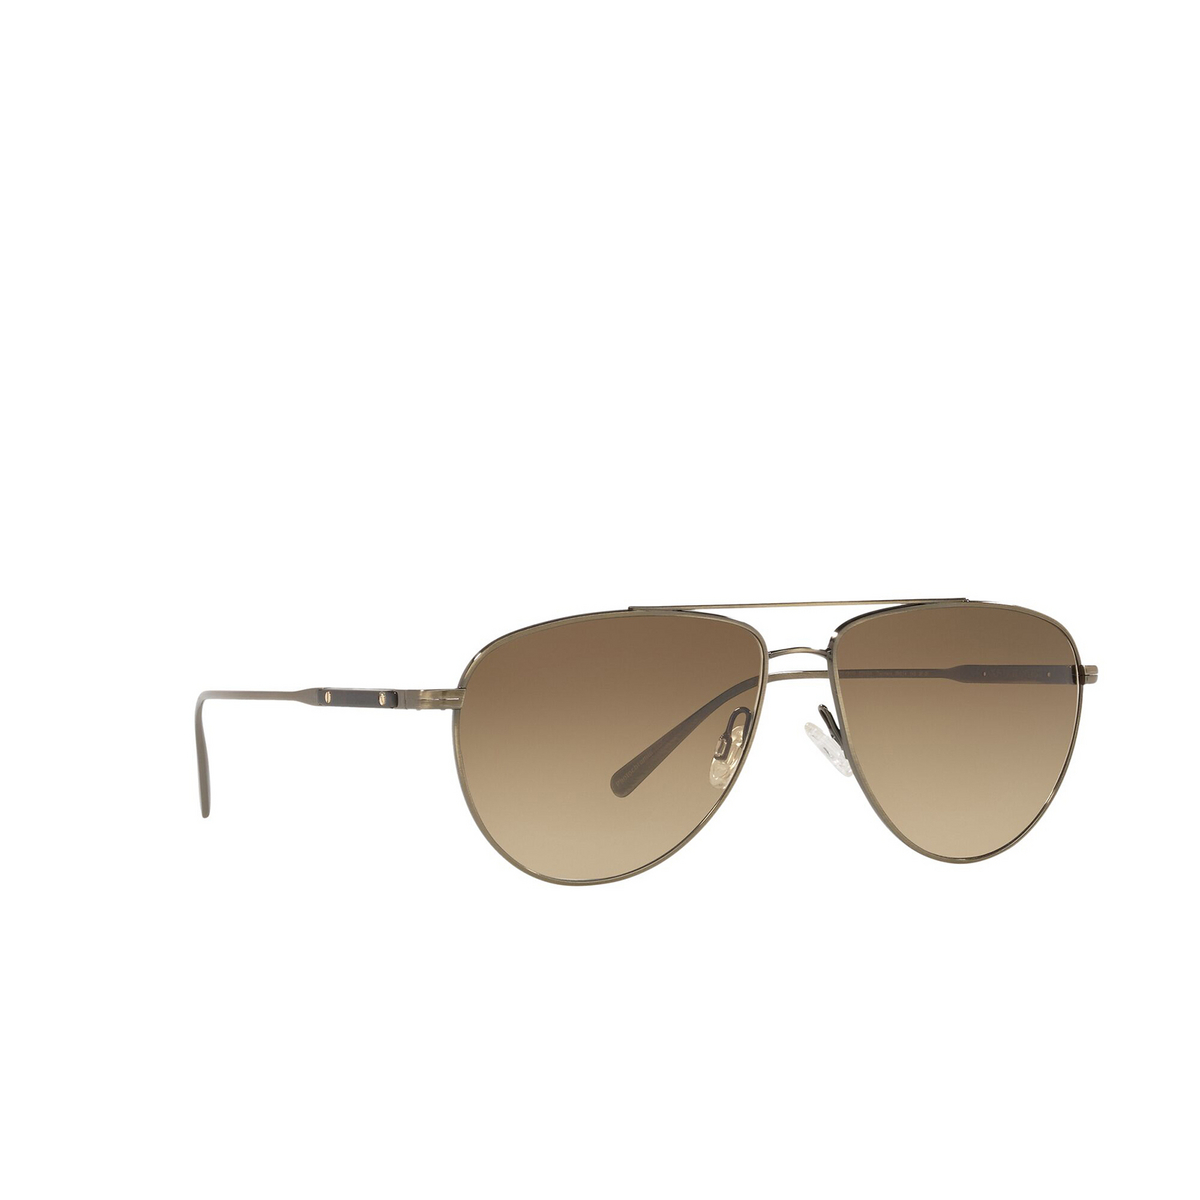 Oliver Peoples® Aviator Sunglasses: Disoriano OV1301S color Antique Gold 5284Q4 - three-quarters view.